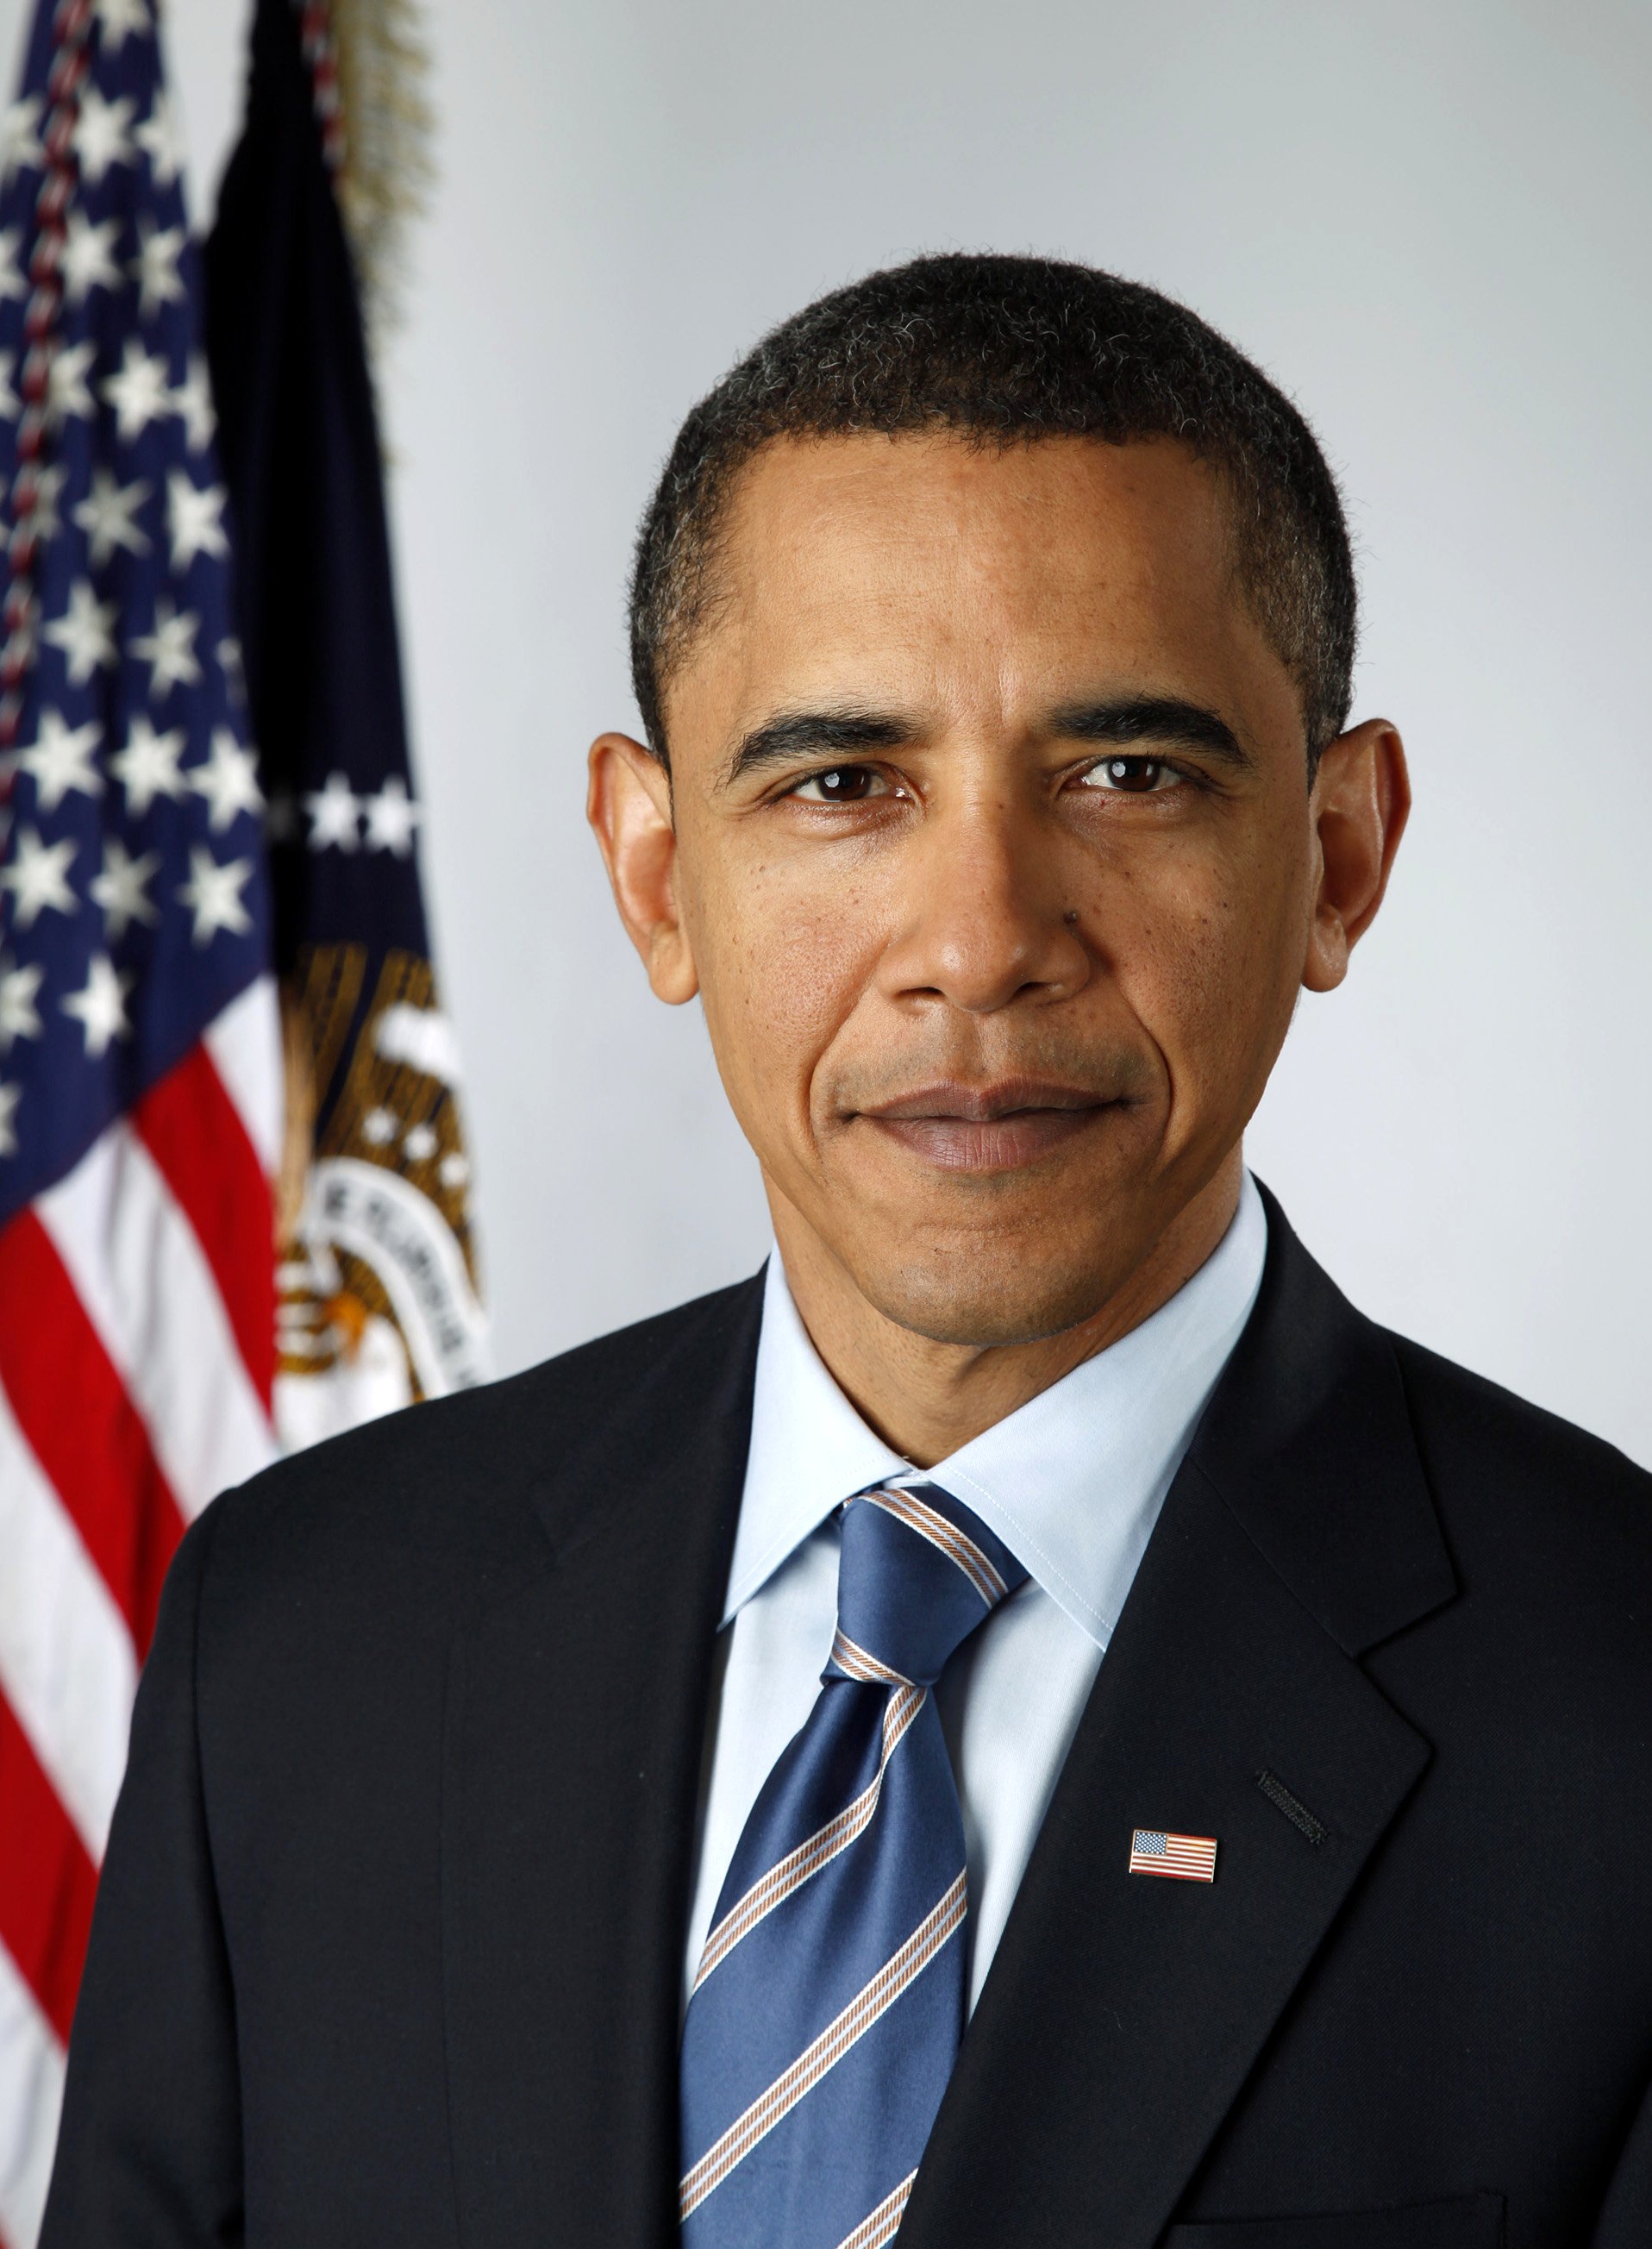 barack obama quotes on change. Barack Obama Biography from